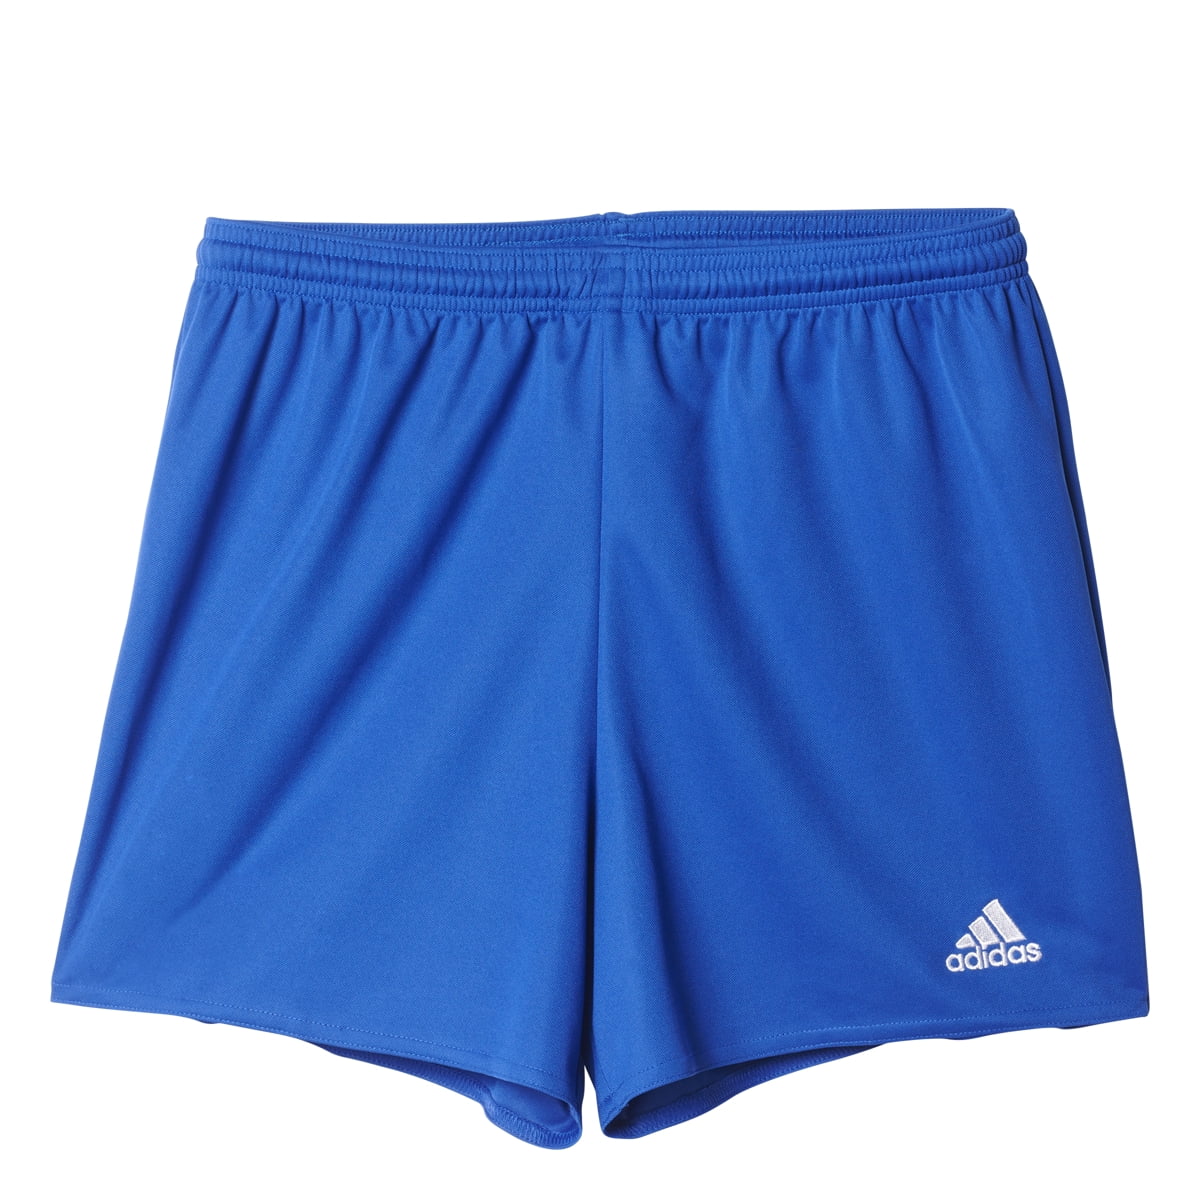 adidas women's parma 16 soccer shorts